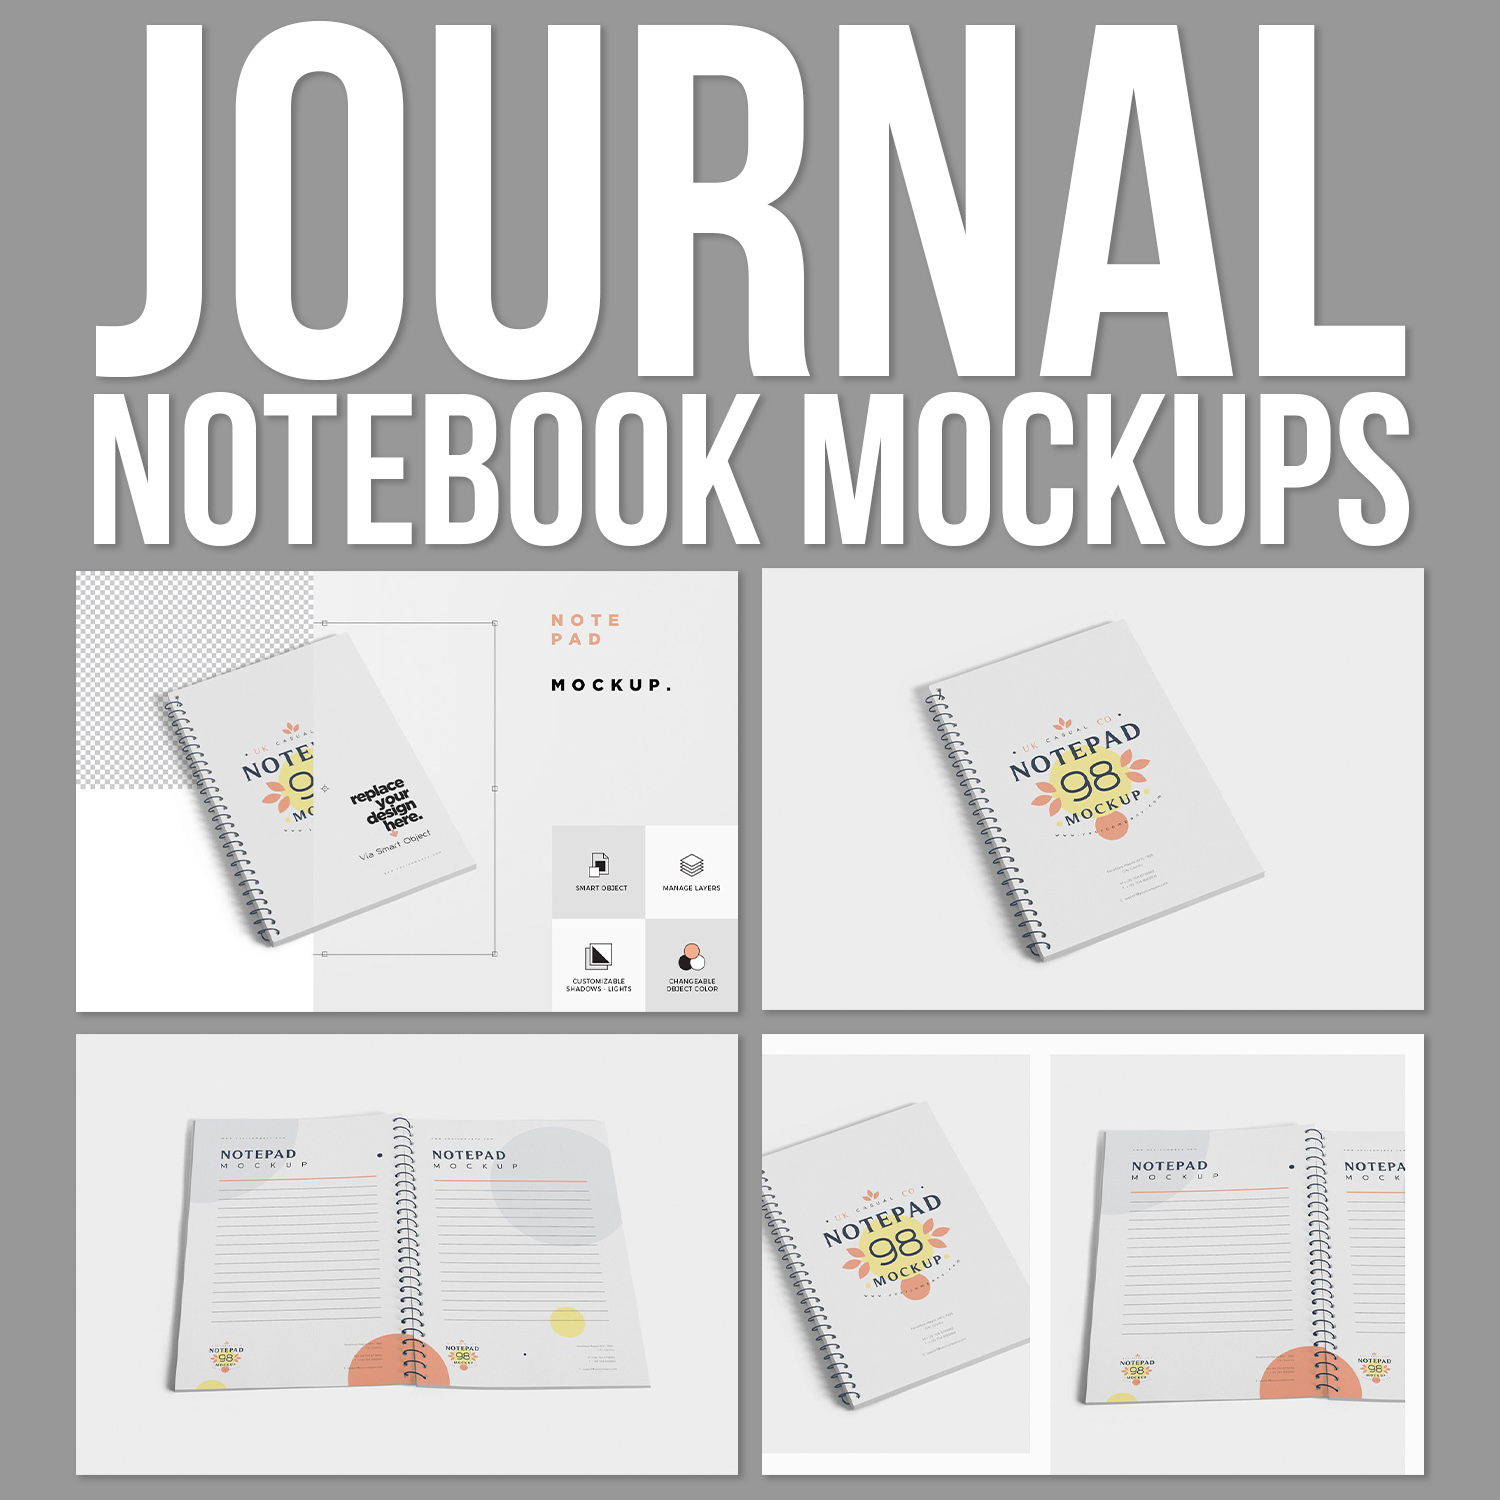 Journal Notebook Mockups.